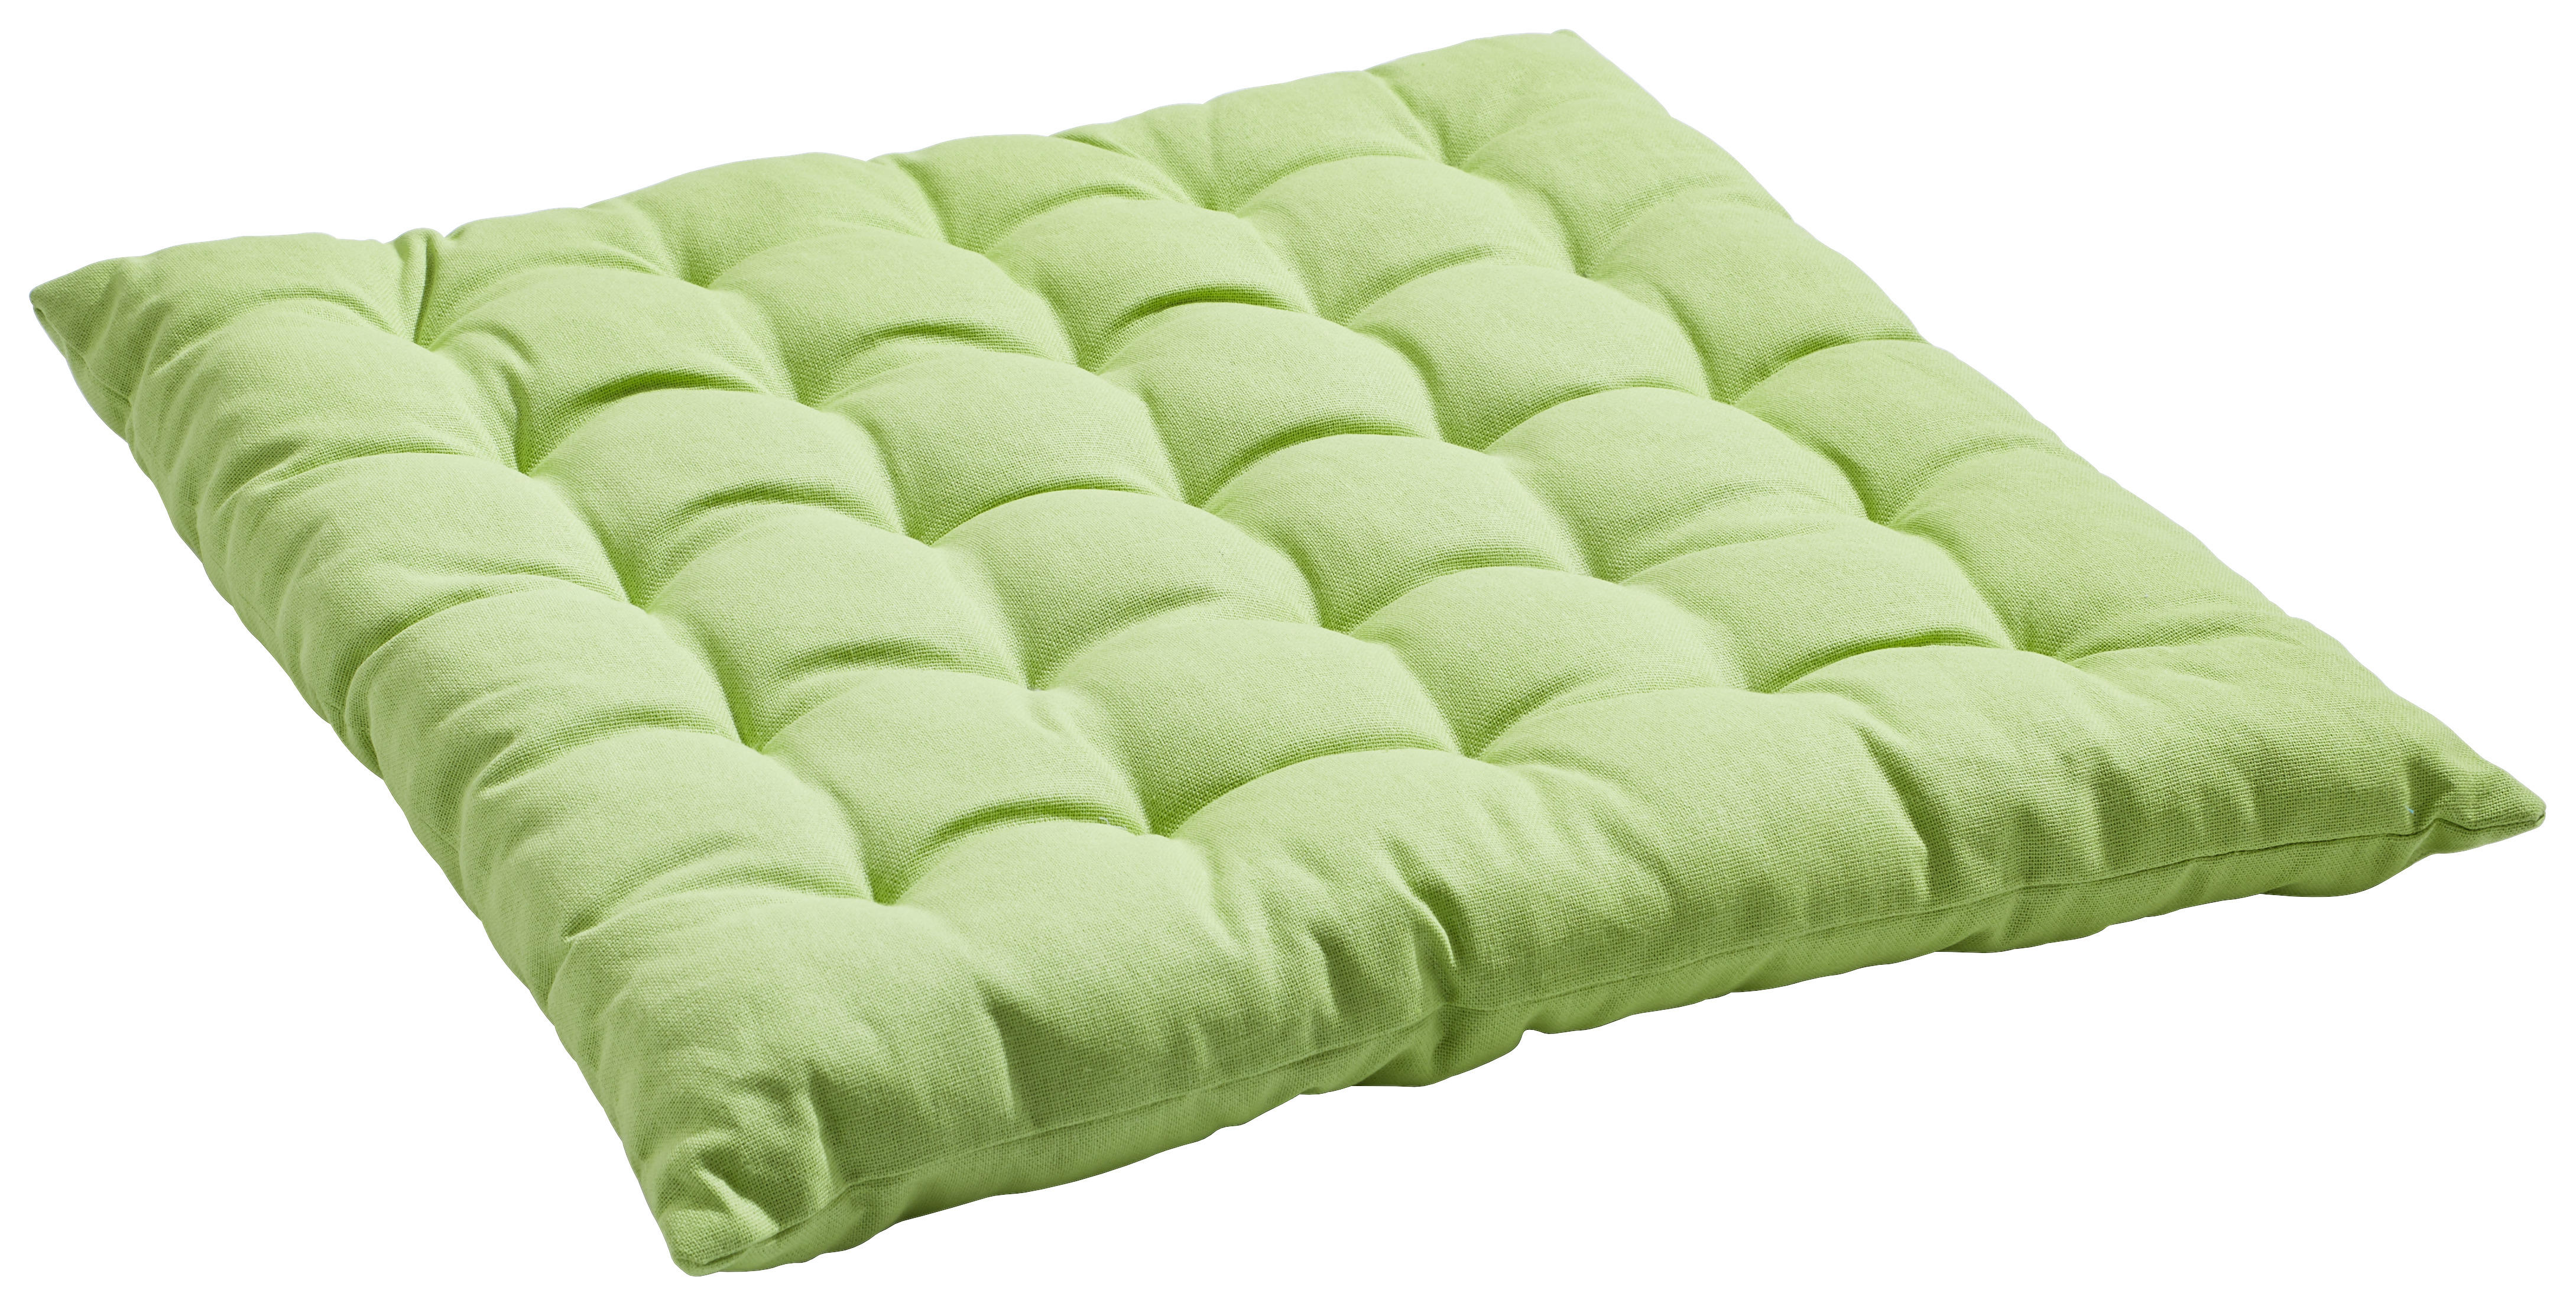 JASTUK ZA SJEDENJE 40/40 cm    - zelena, Design, tekstil (40/40cm) - Boxxx